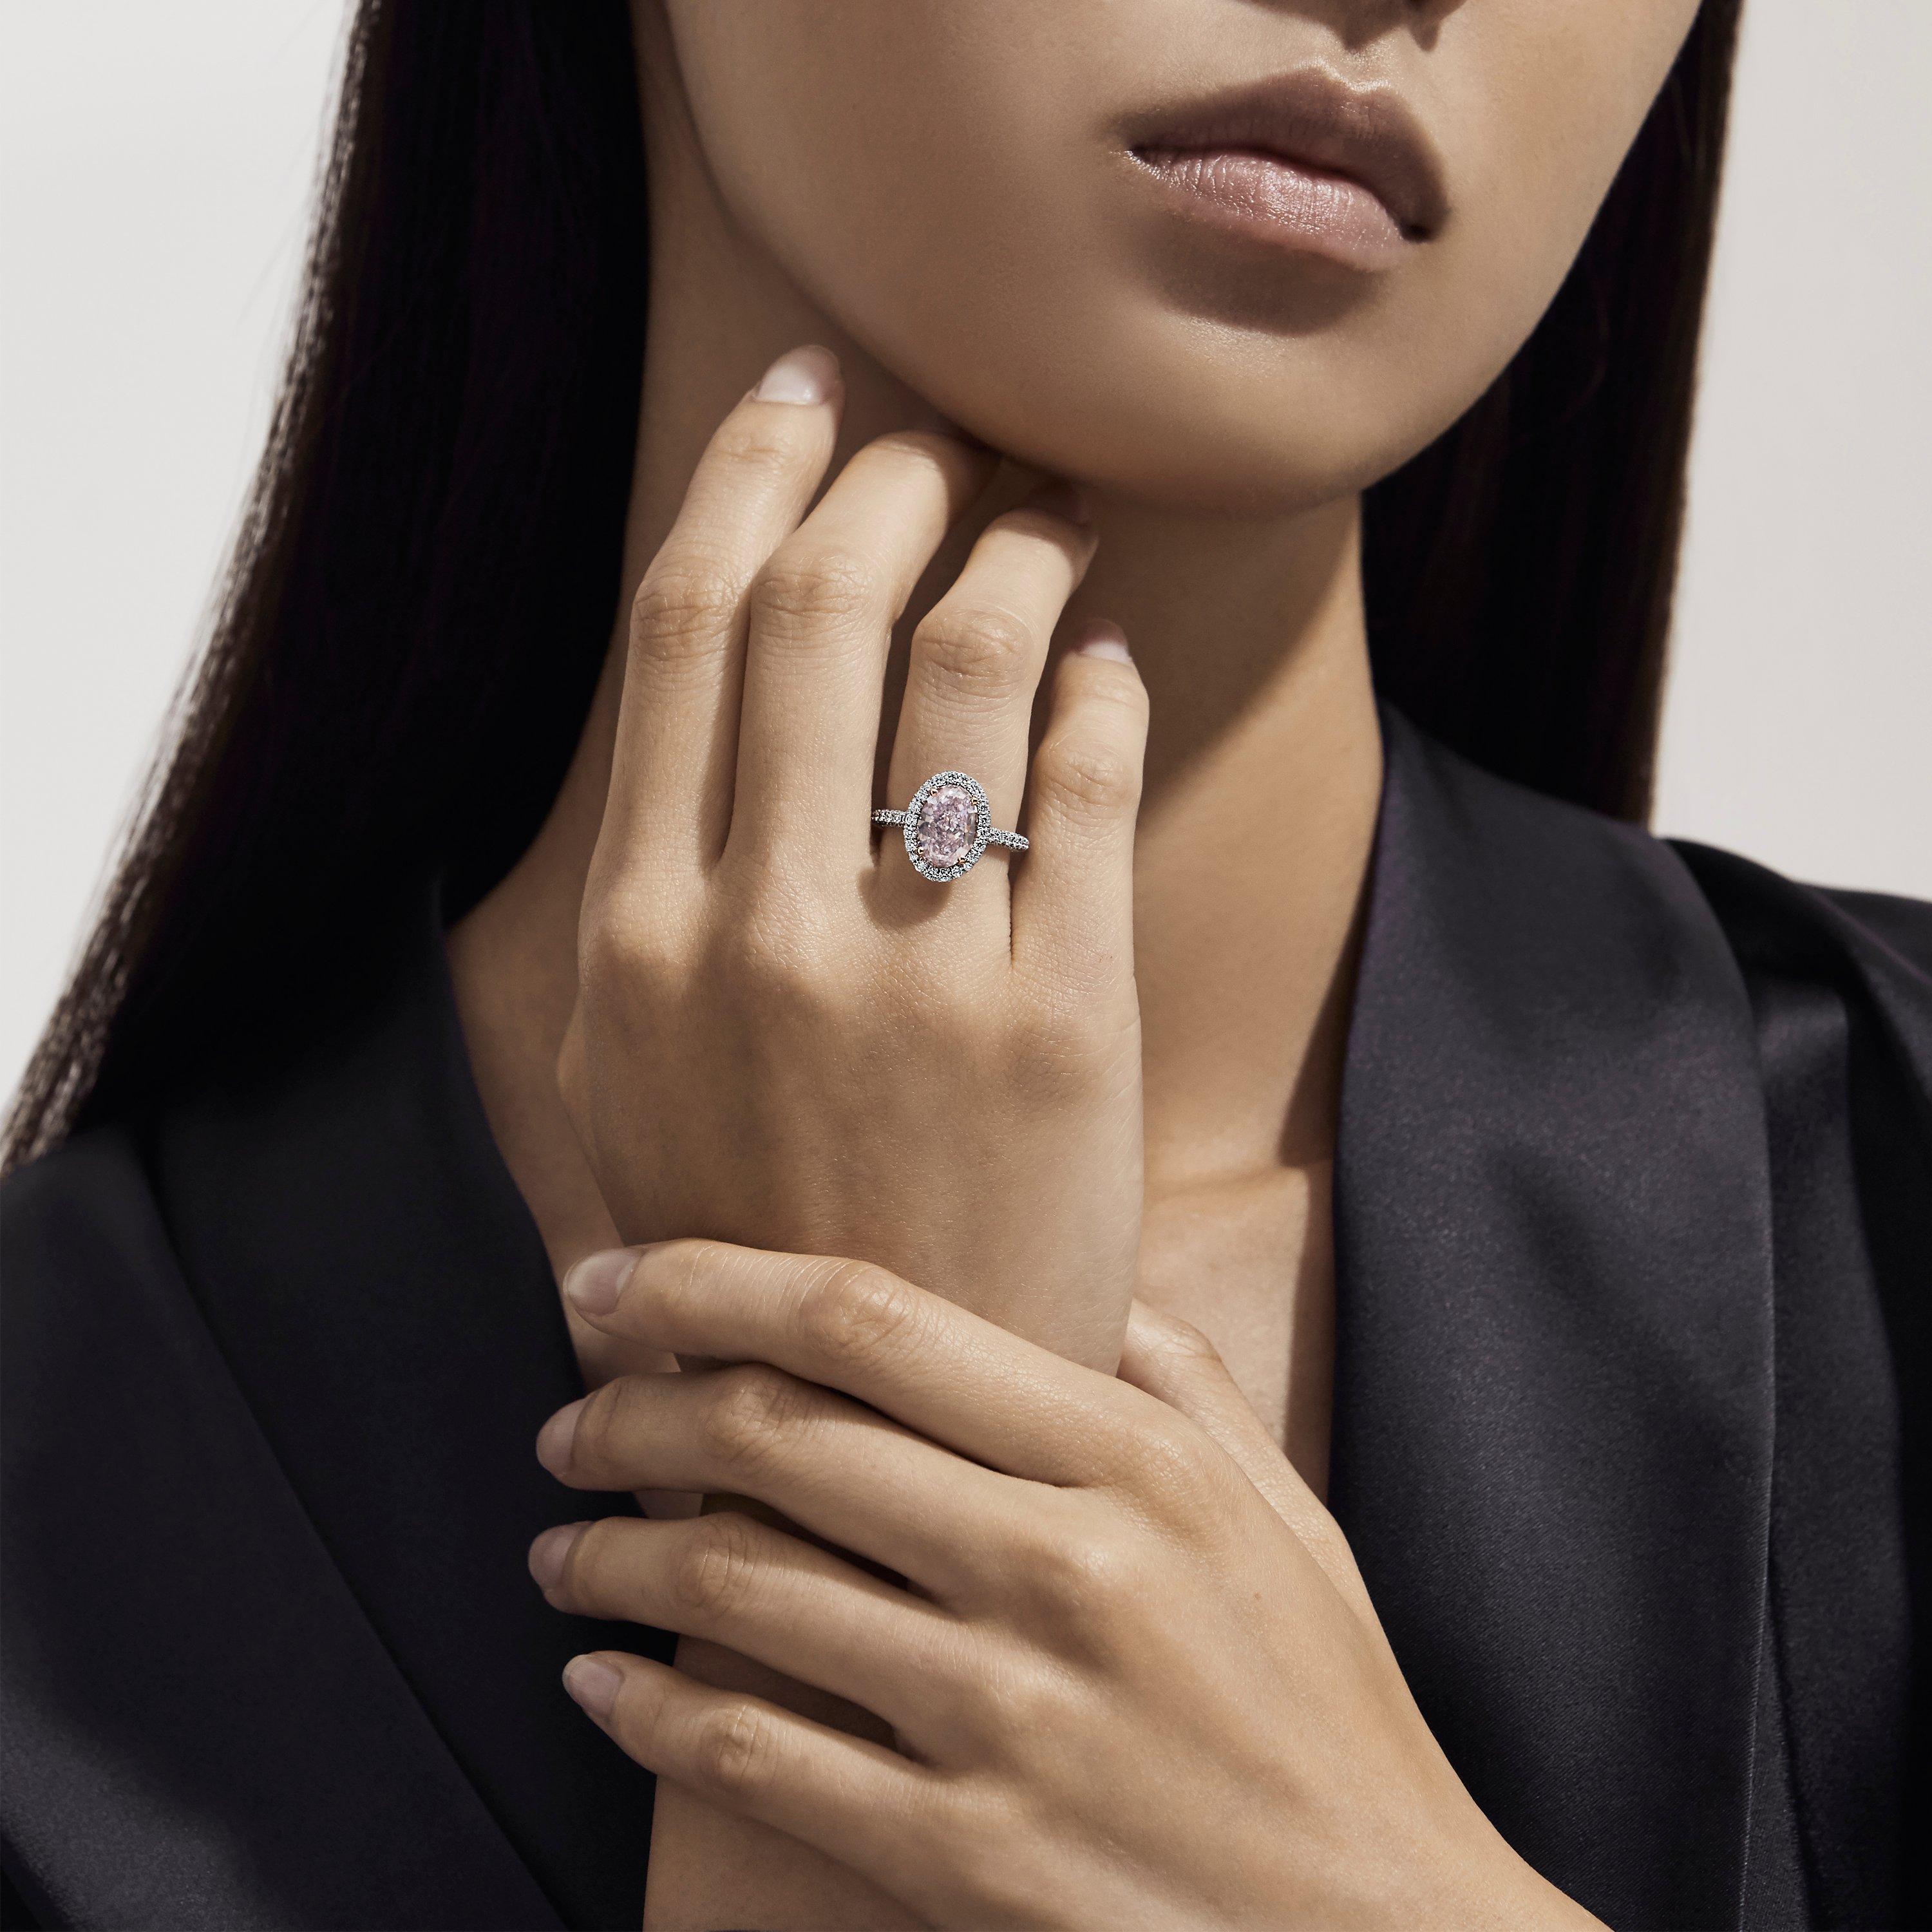 De Beers 13.25-carat oval-cut diamond engagement ring